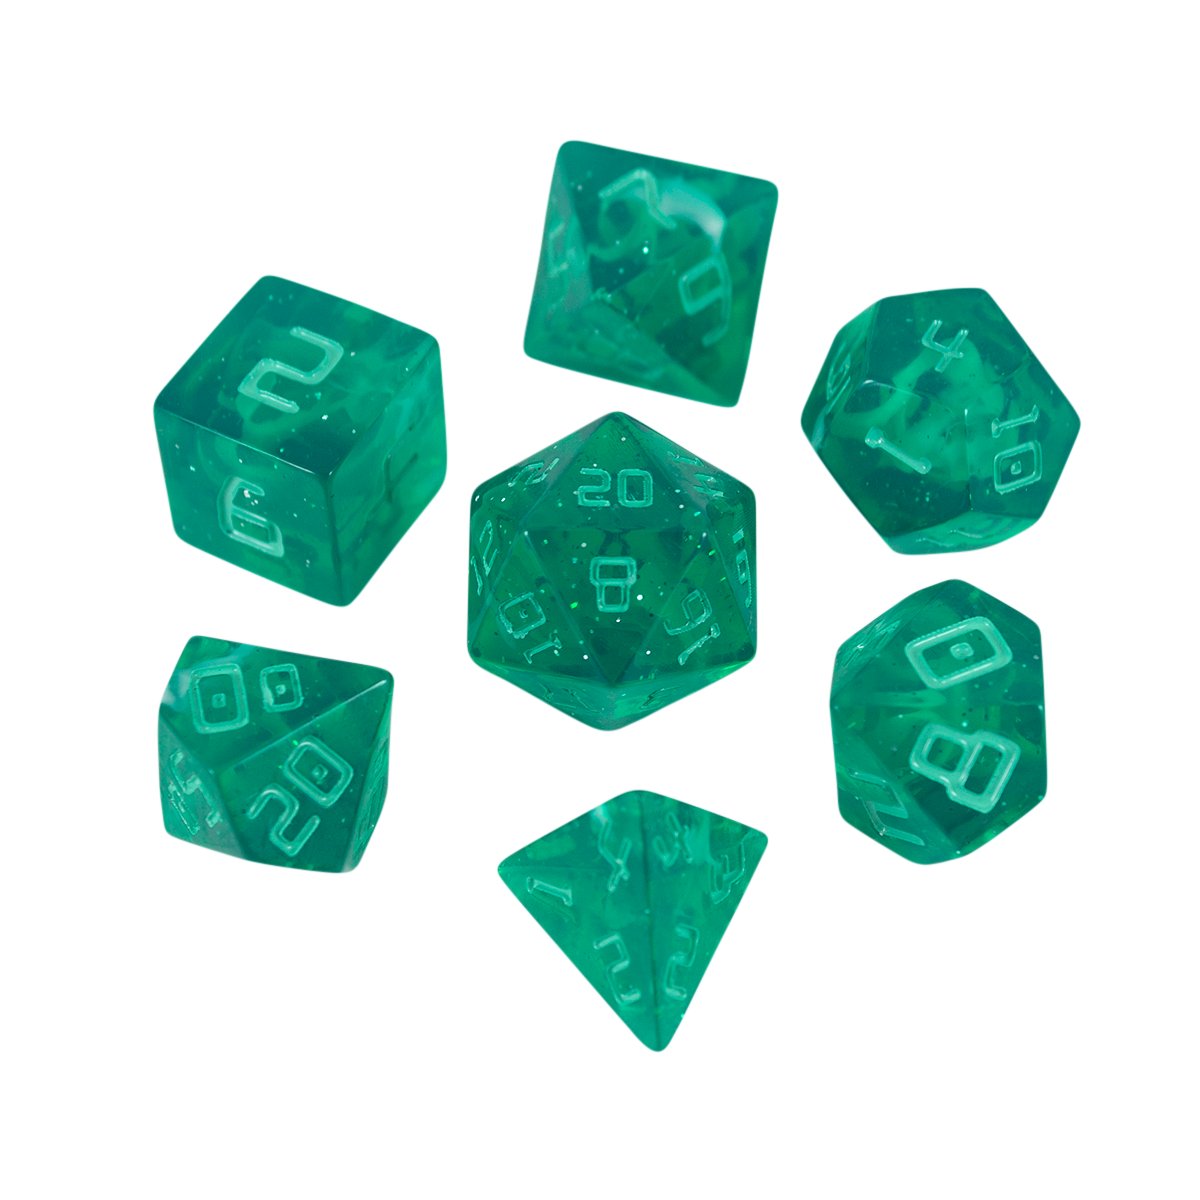 Starfarer 'Quasar' Green and White Sci-Fi RPG dice